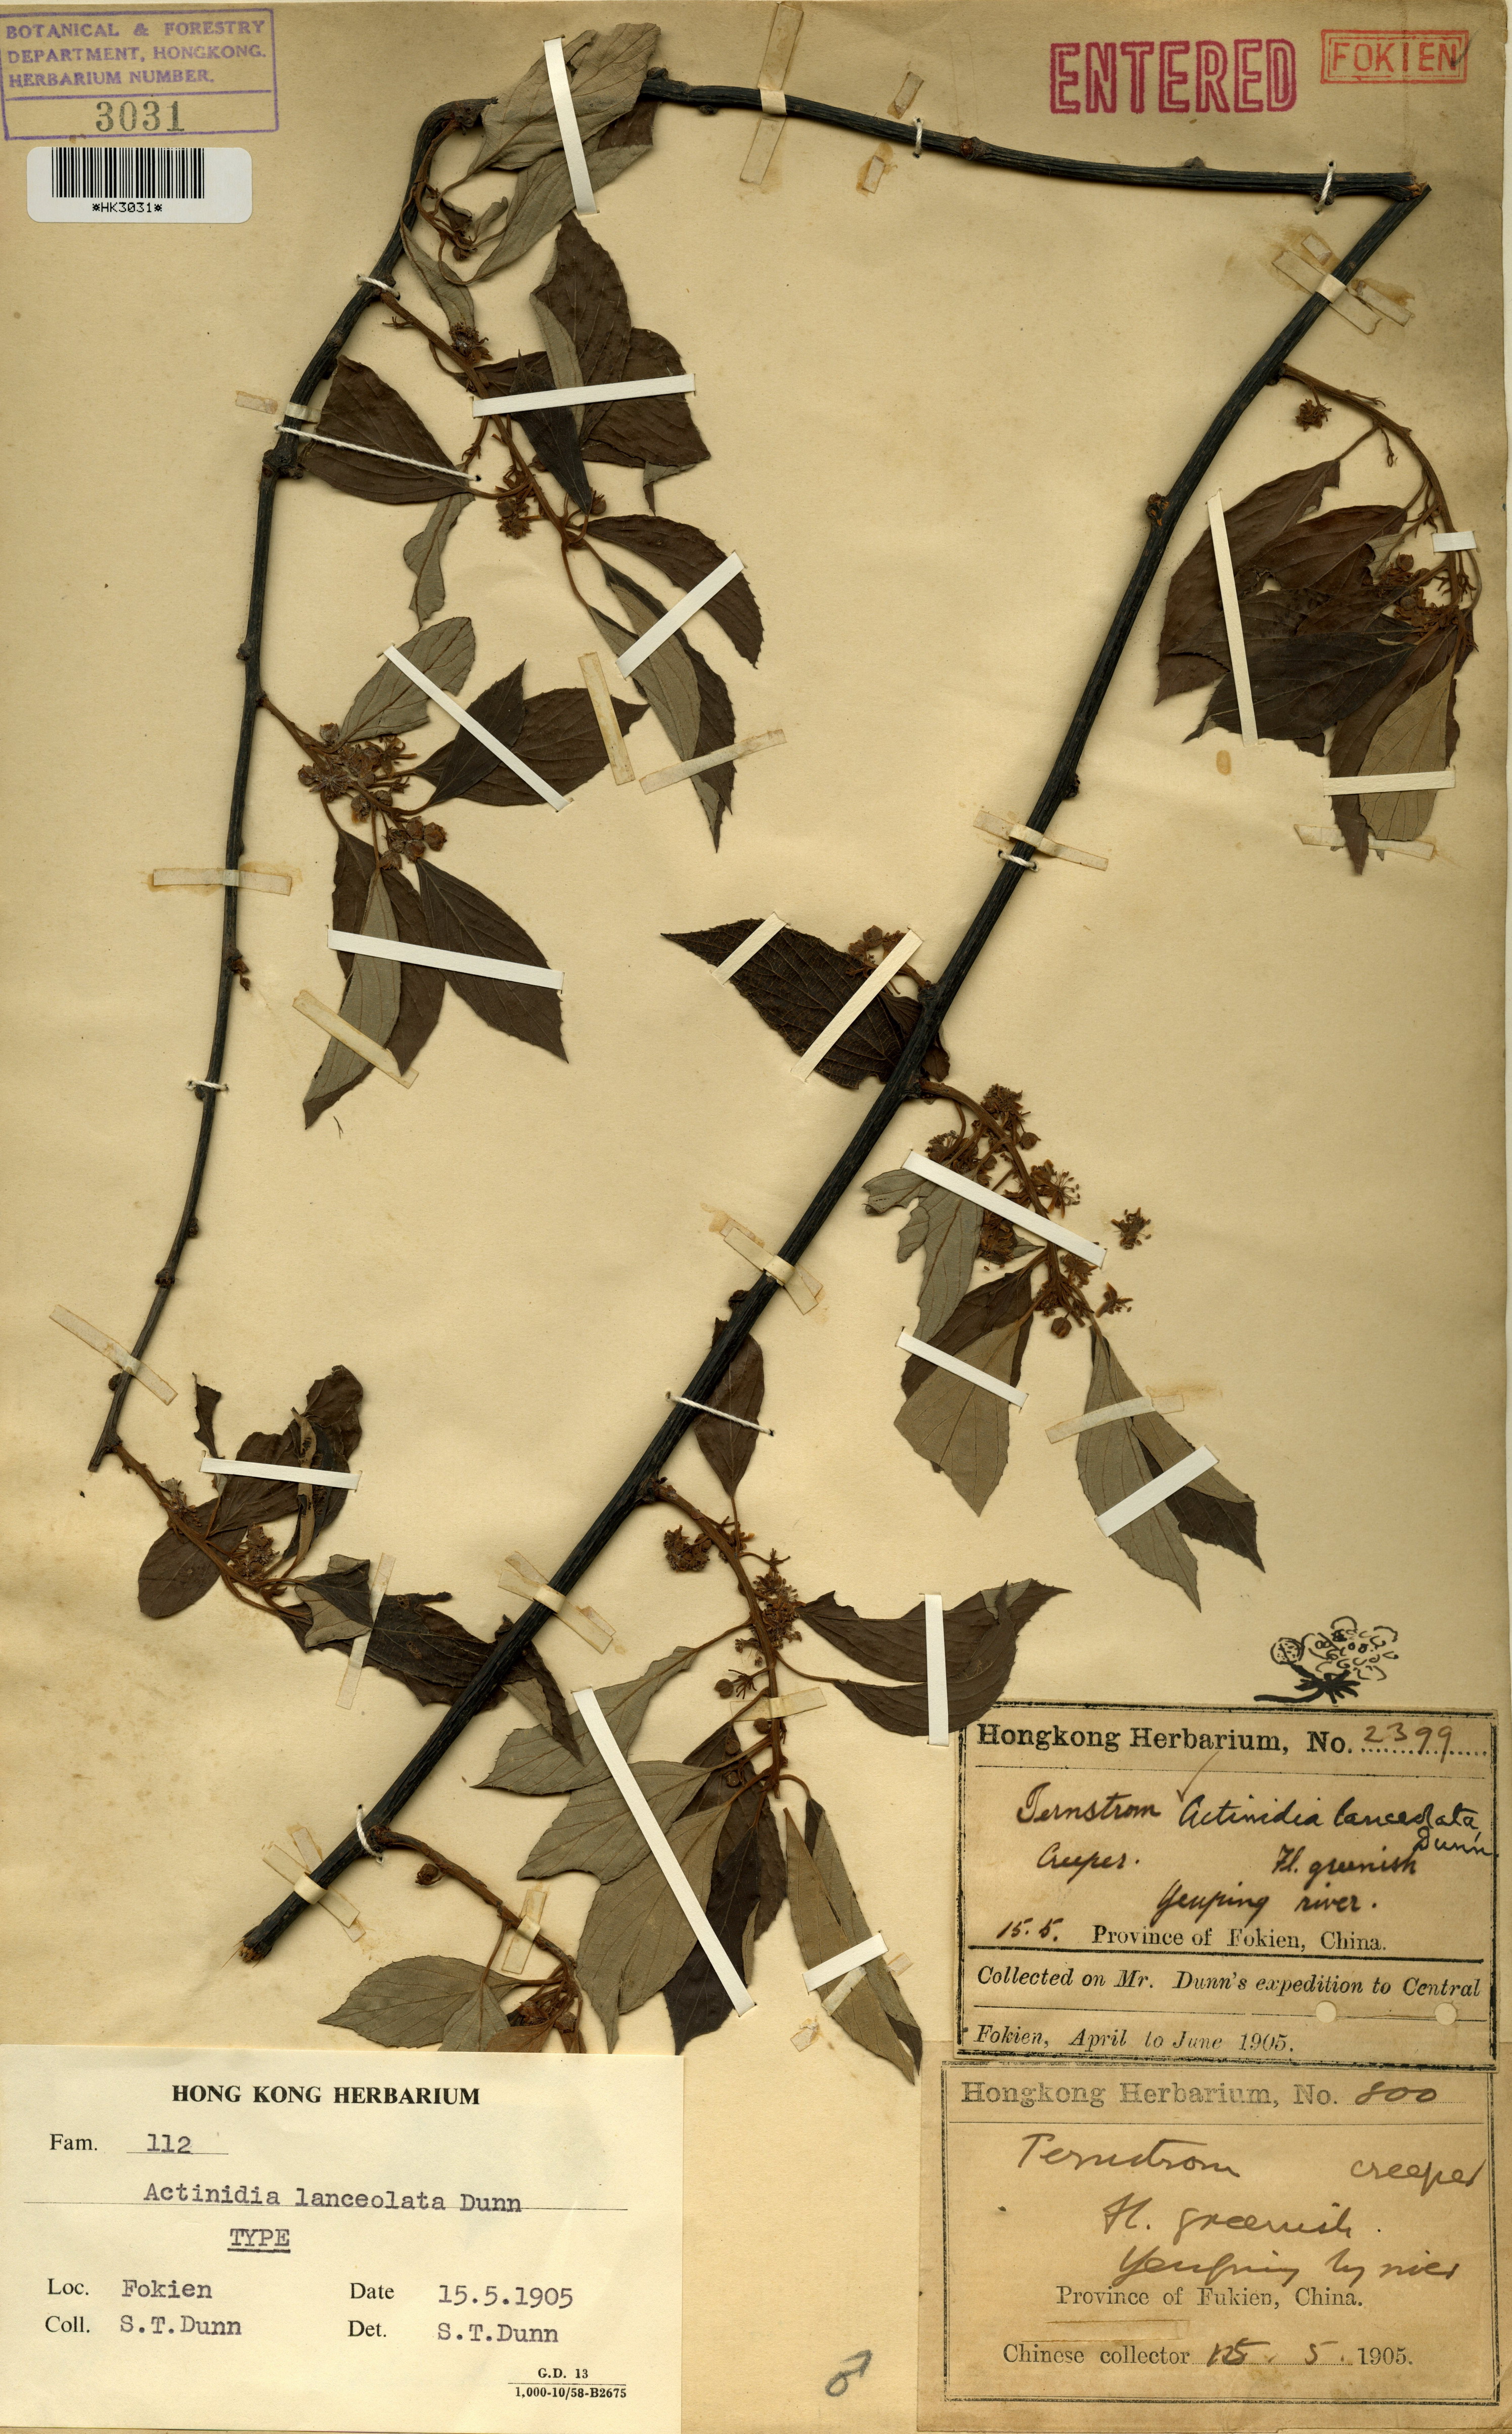  Actinidia lanceolata Dunn